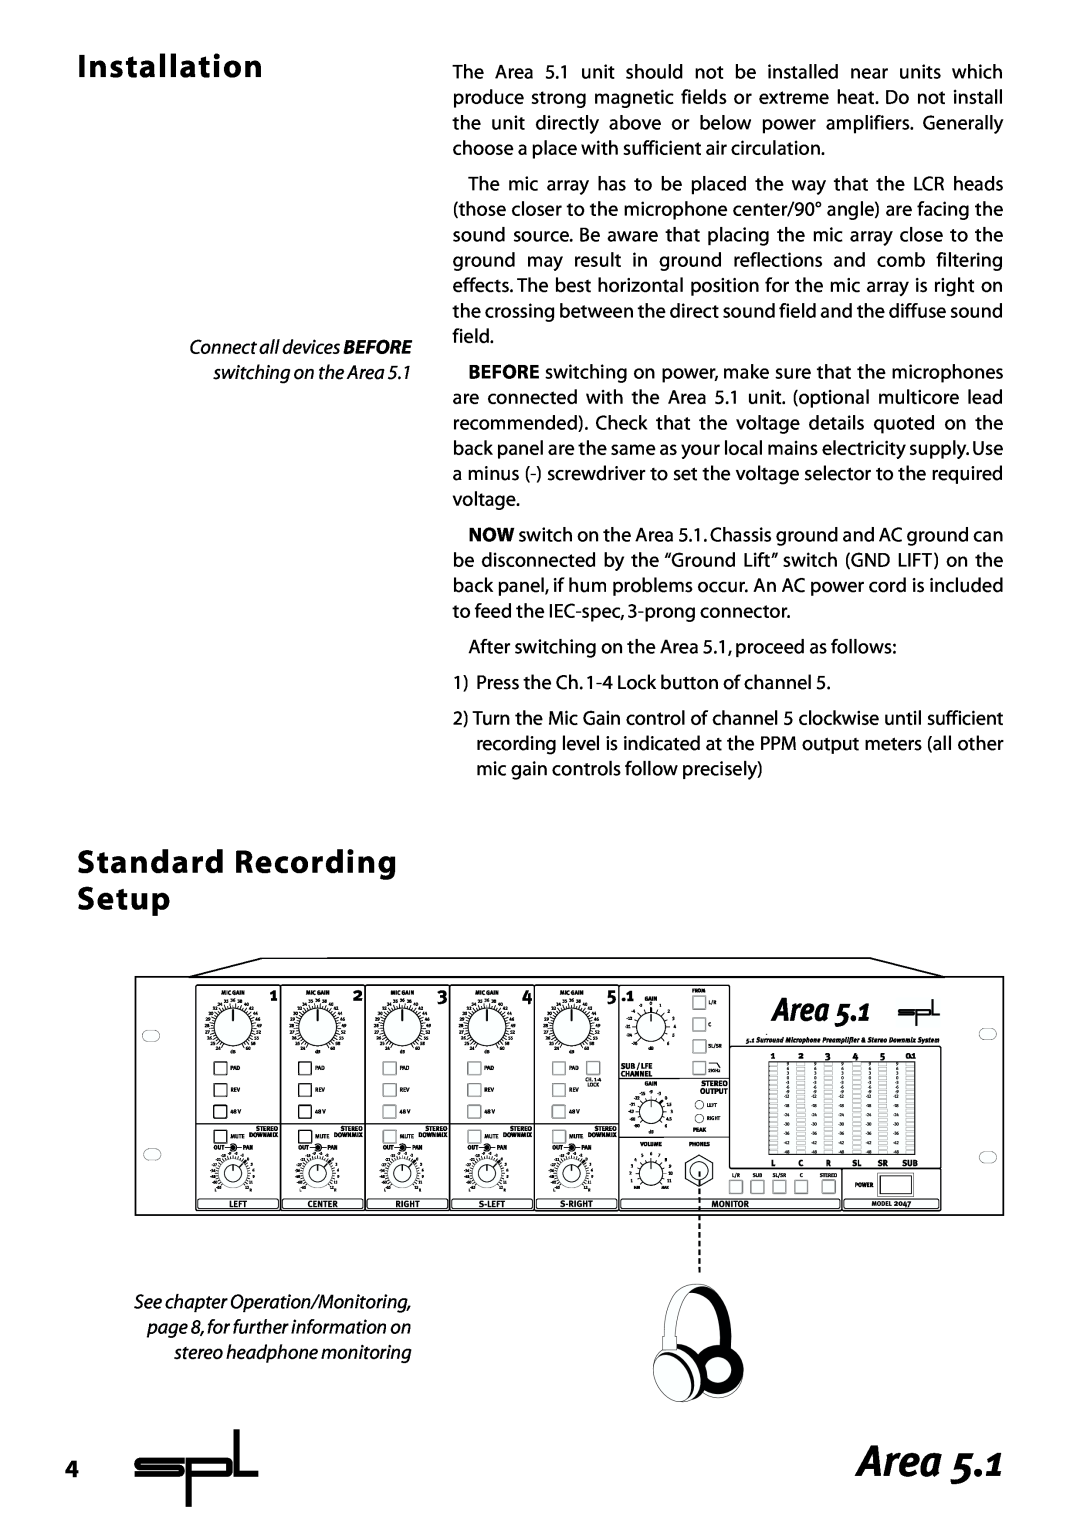 Sound Performance Lab Area 5.1 manual Installation, Standard Recording Setup 